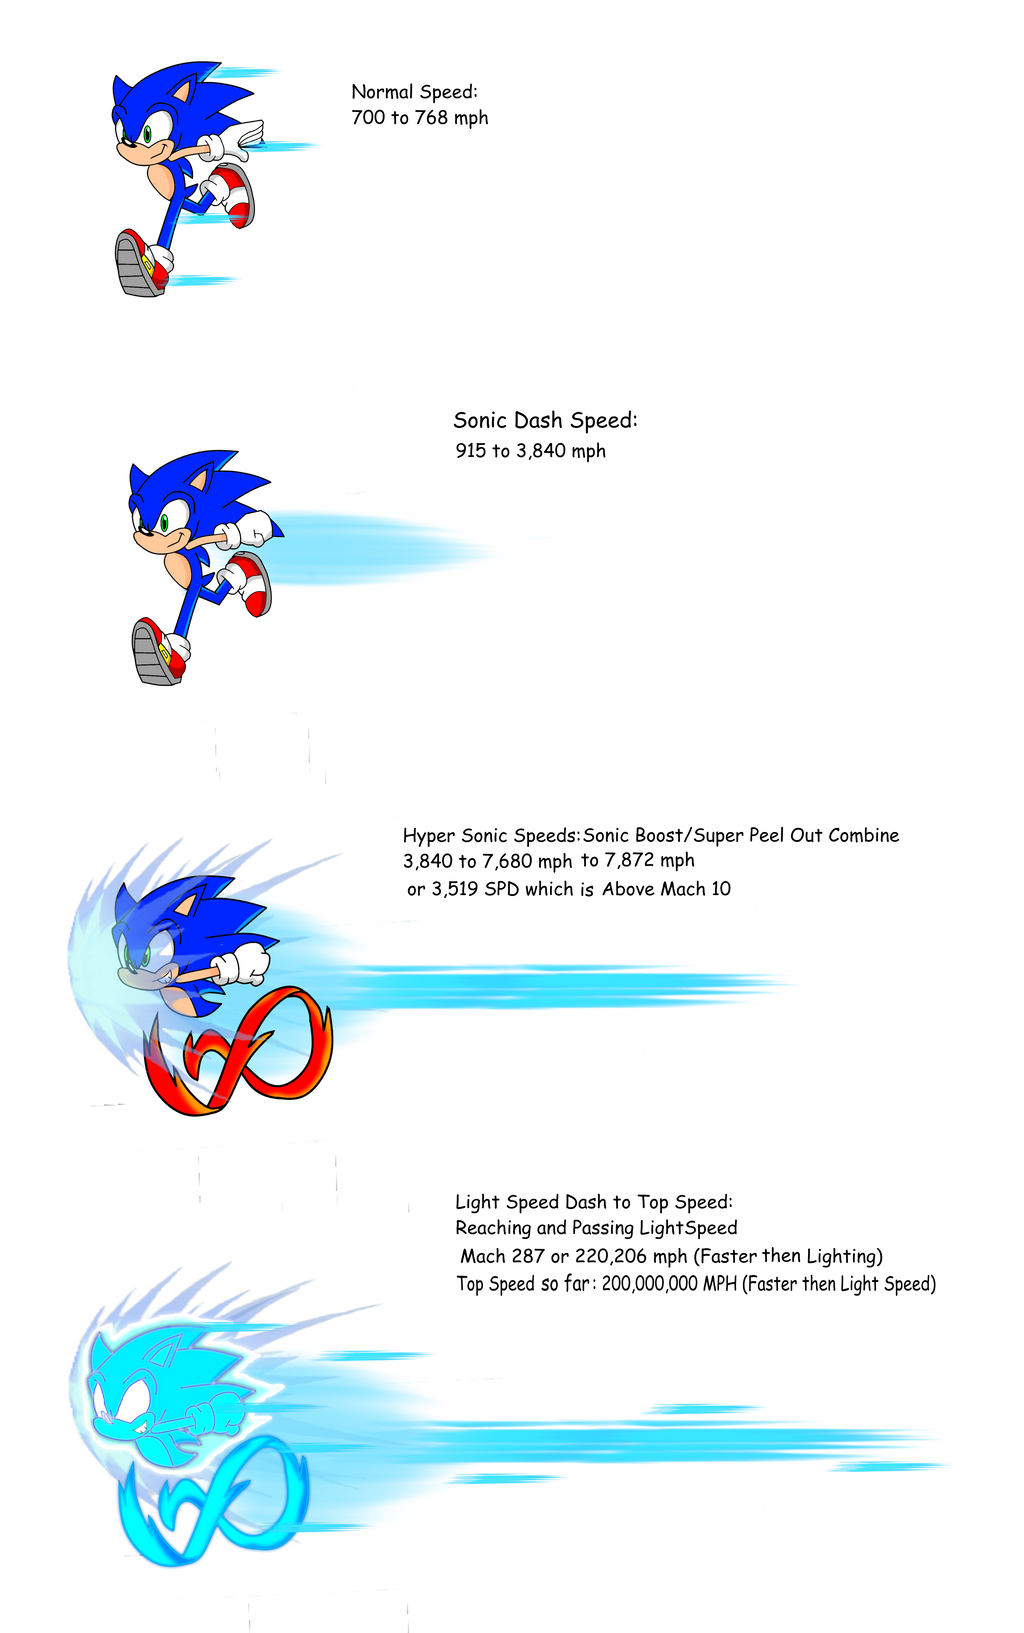 Super Shadow Blue Vs. Super Sonic Infinite Rose - Shadow's Fierce